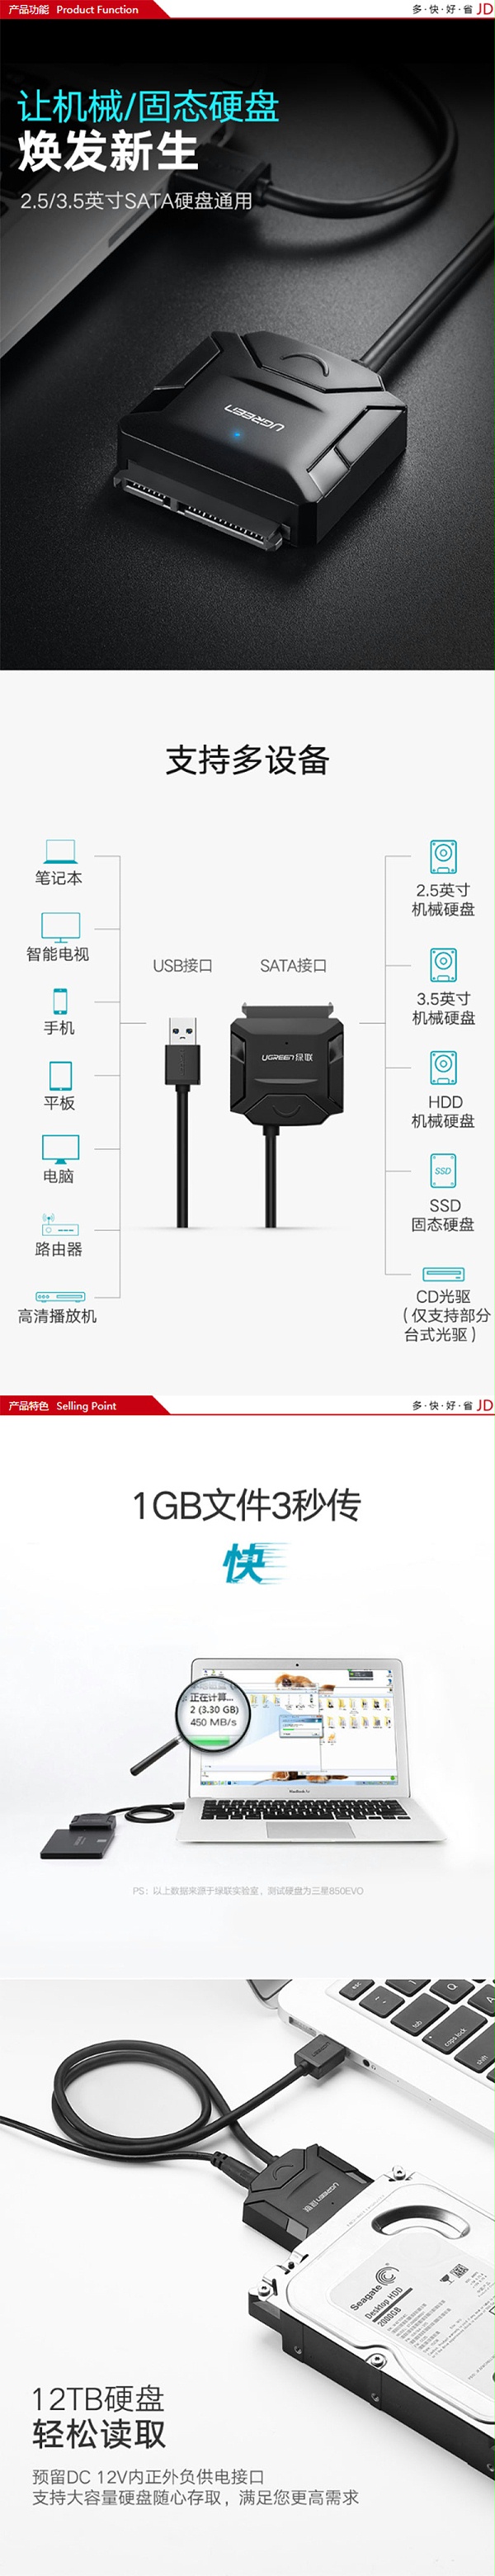 绿联20215 USB2.0转SATA